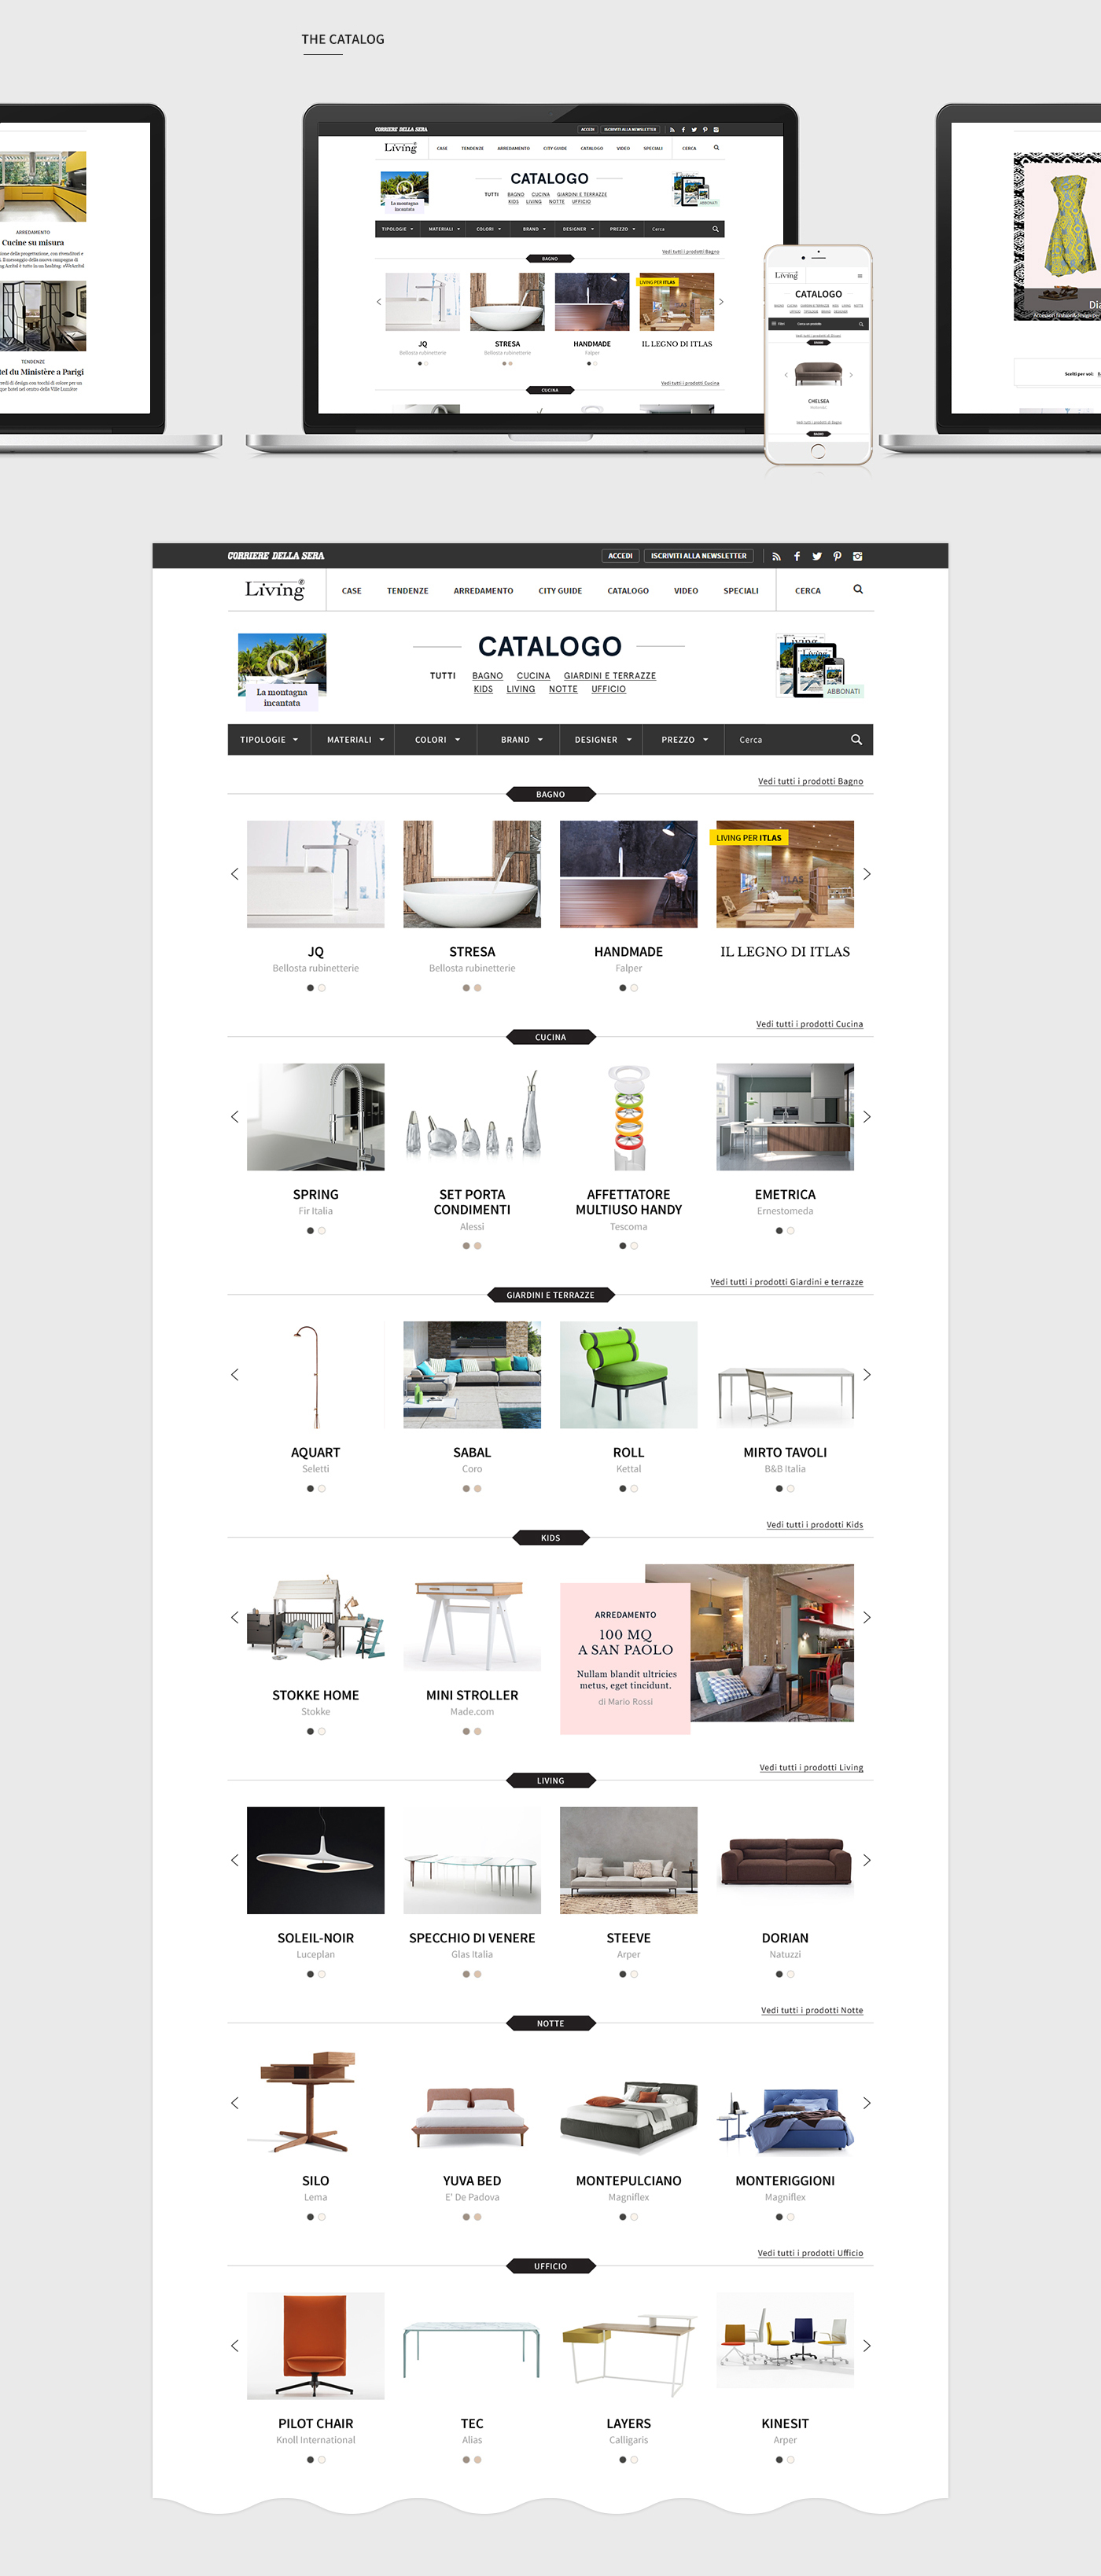 living CORRIERE DELLA SERA RESTYLING design Interior catalog home lifestyle FURNISHING wordpress